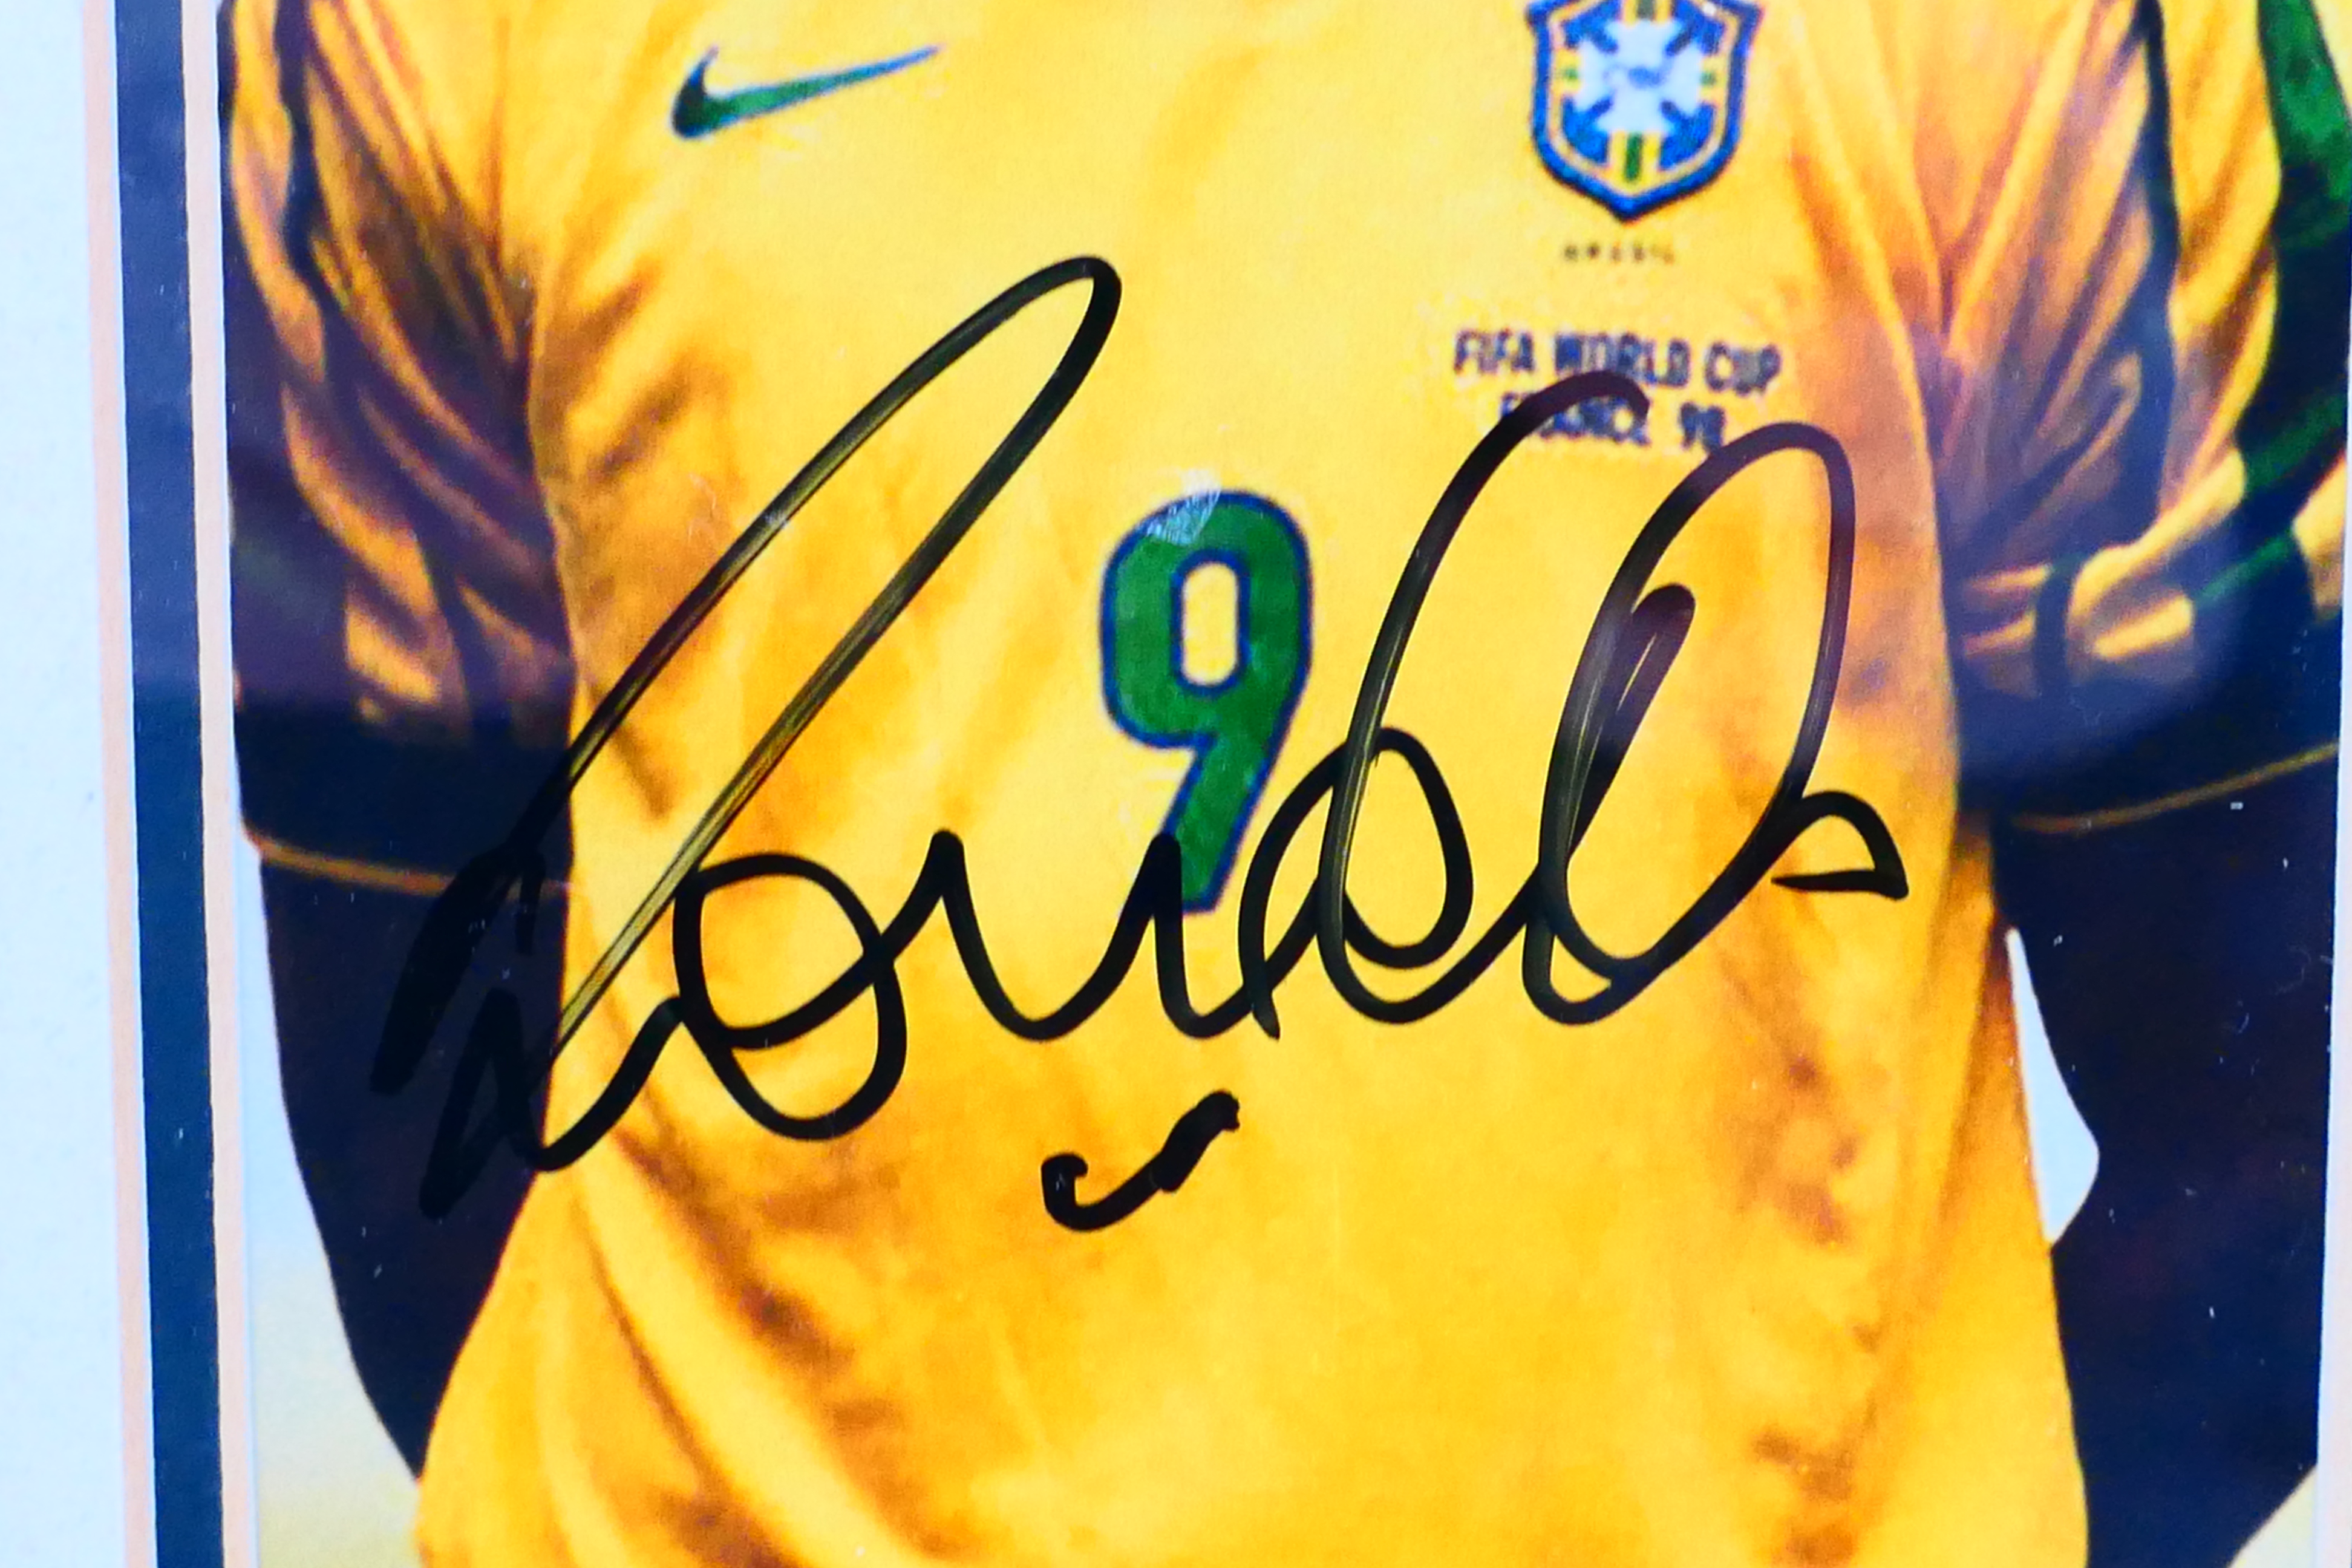 Ronaldo - A photographic image of Ronaldo Luís Nazário de Lima in France '98 Brazil kit, - Image 3 of 4